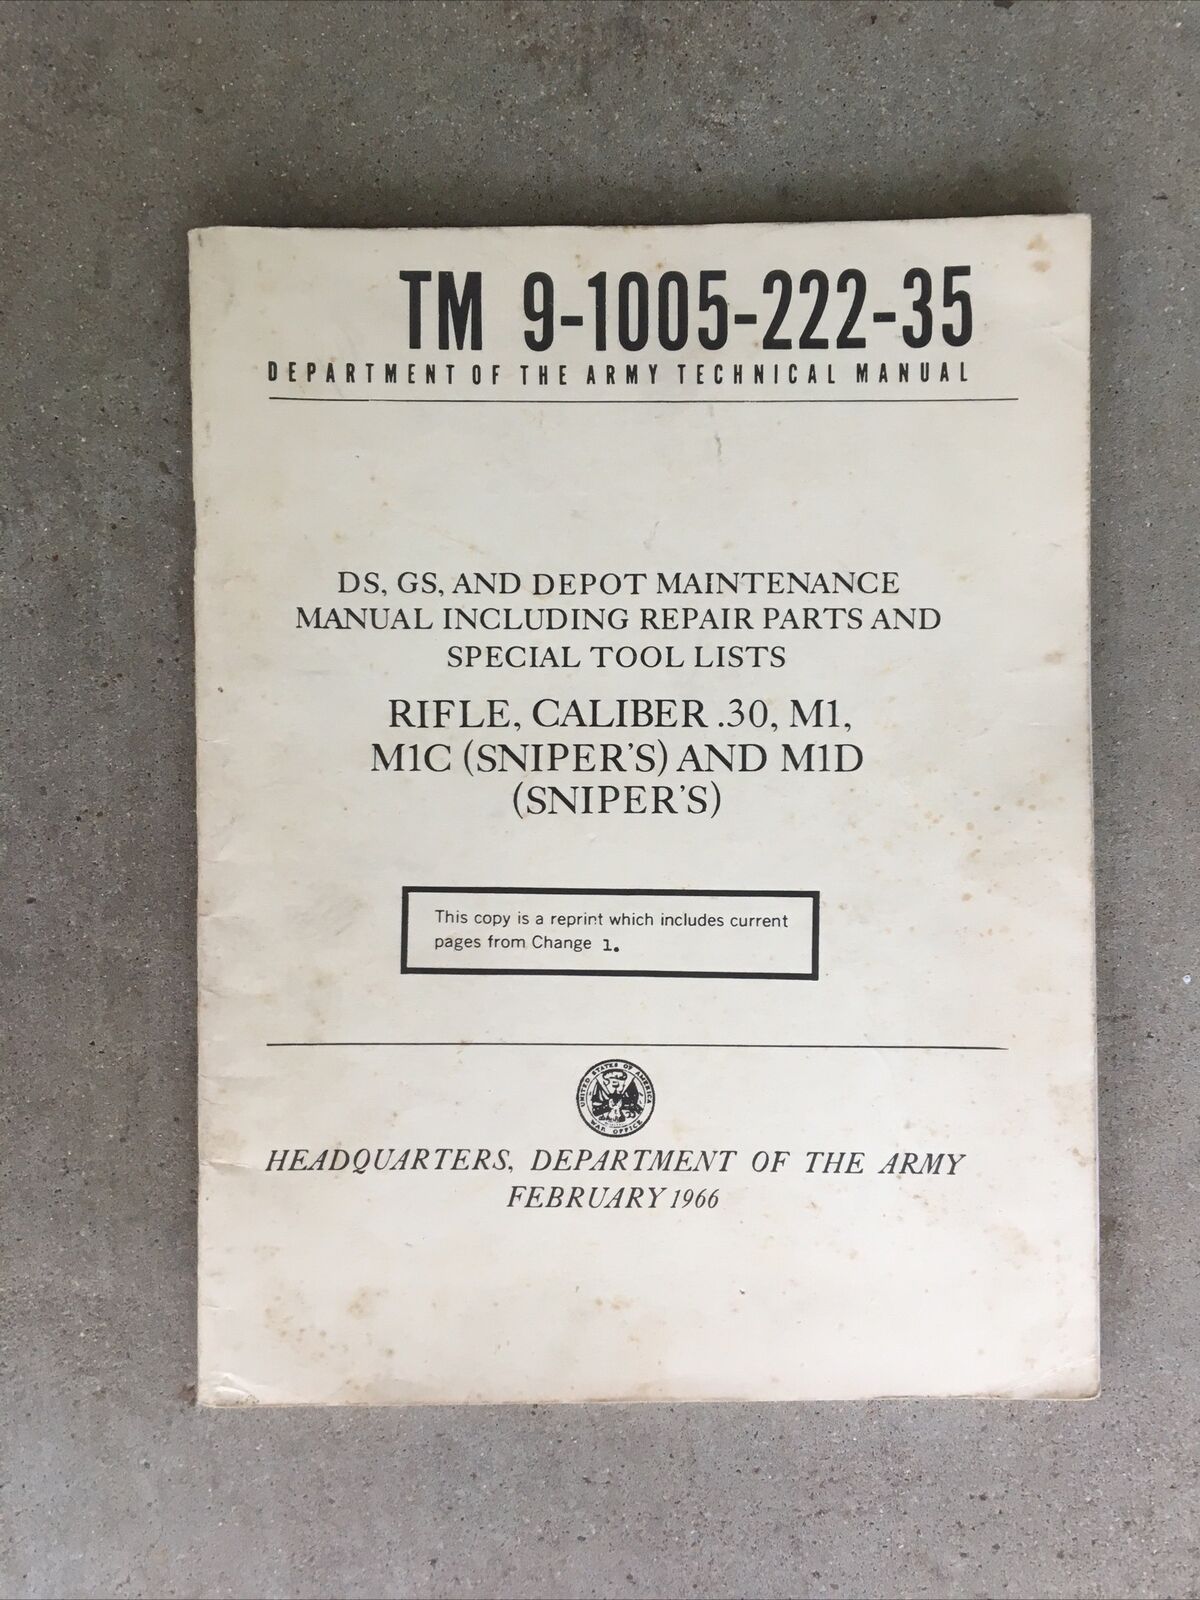 TM 9-1005-222-35 ~ .30, M1, M1C, and M1D Tech Manual 1966 - Complete